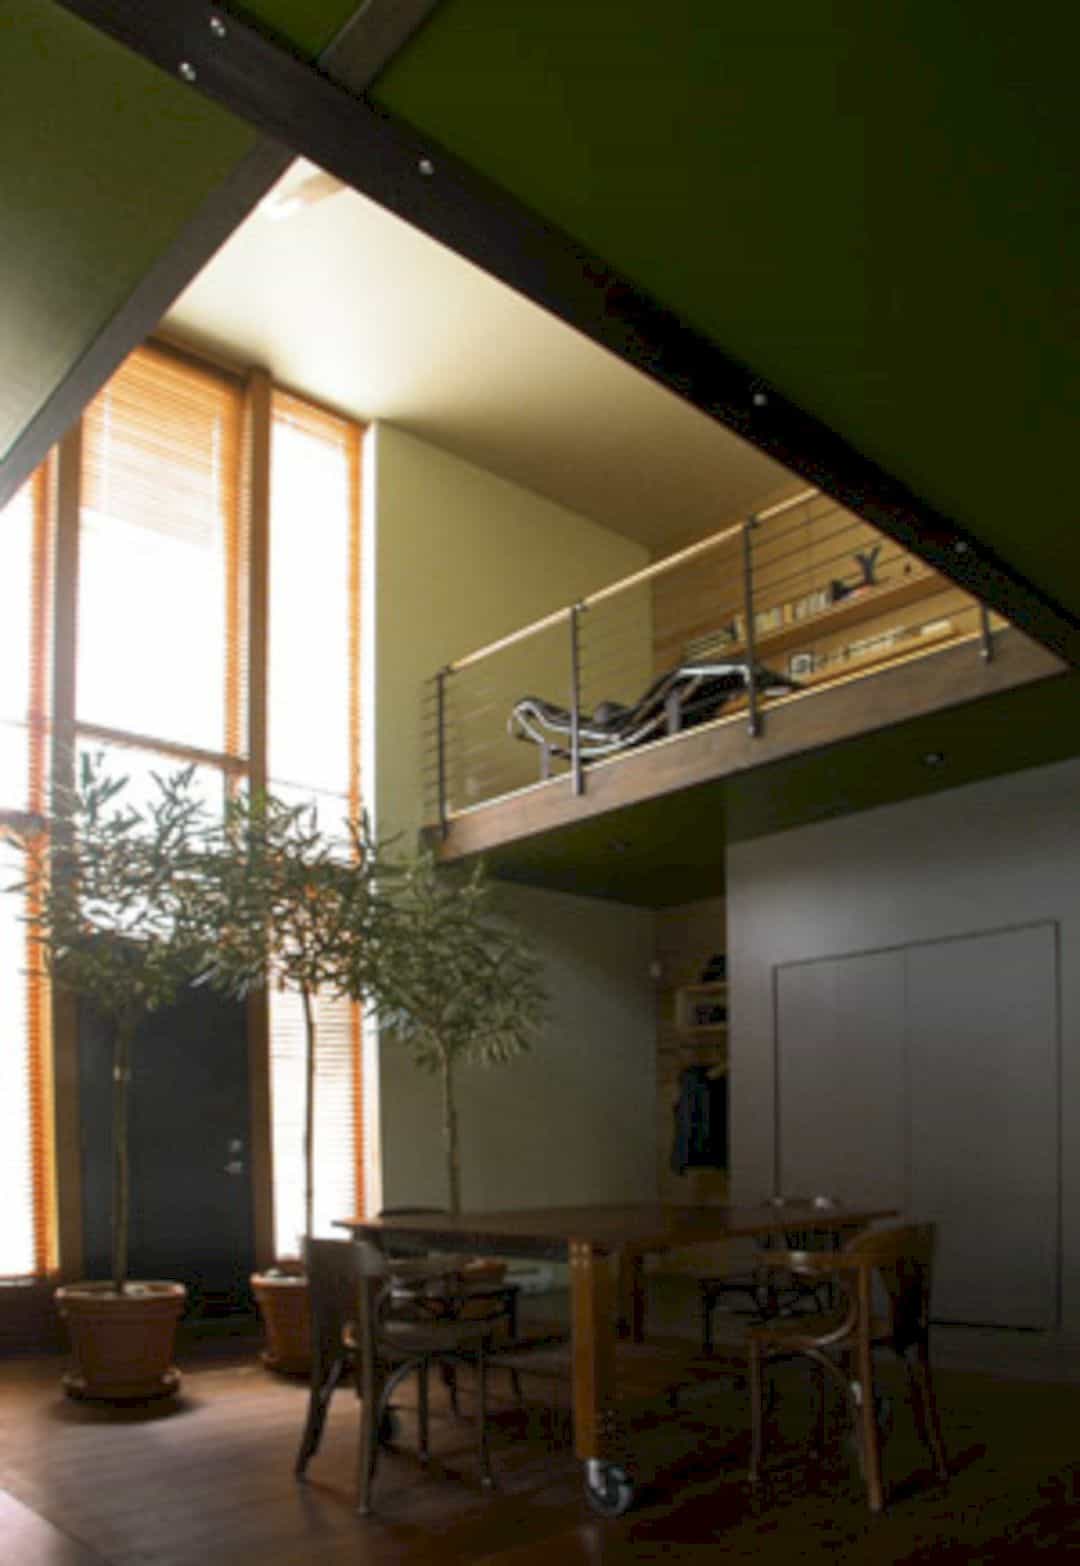 The Maison Tour Combining Two Buildings Into A Home Studio Concept 3